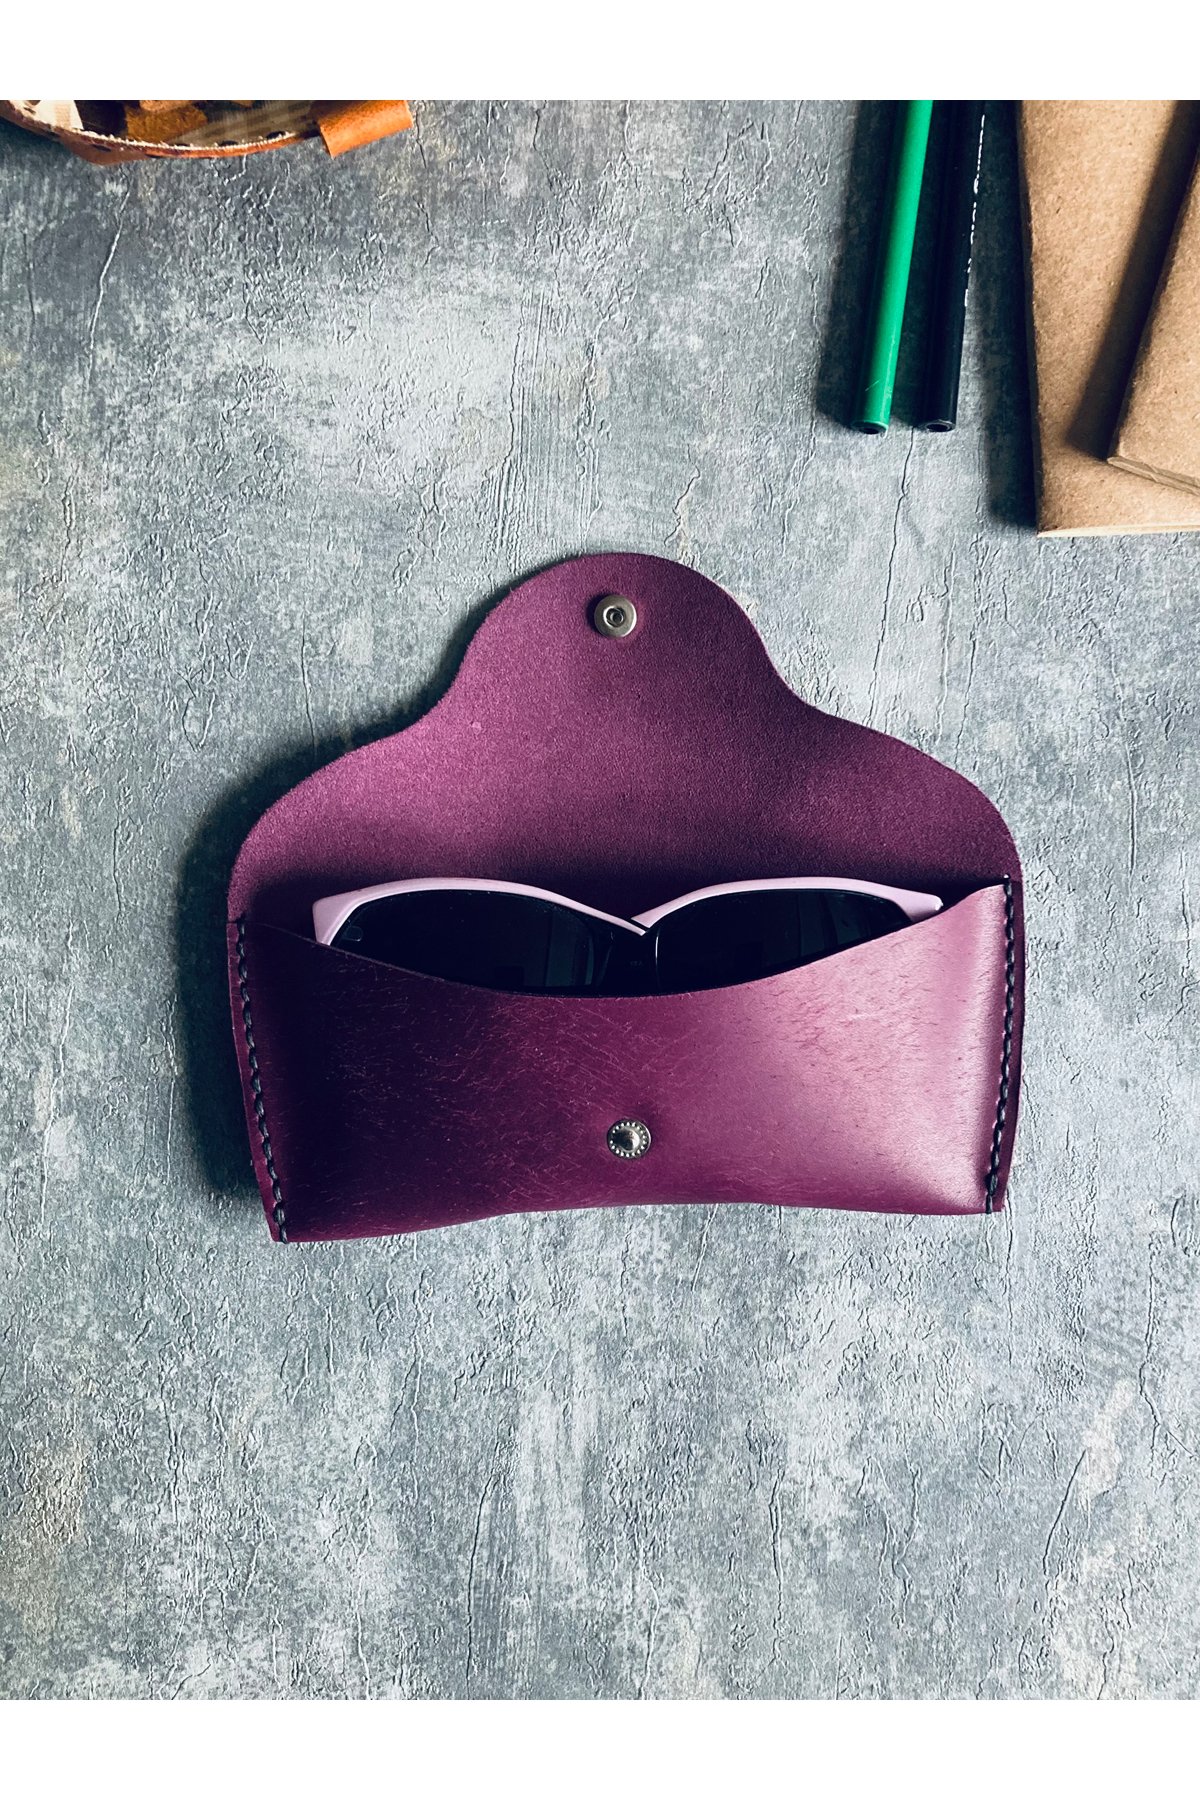 Set of 4 Eyeglasses Cases - Purple Leather | Bretya Leather